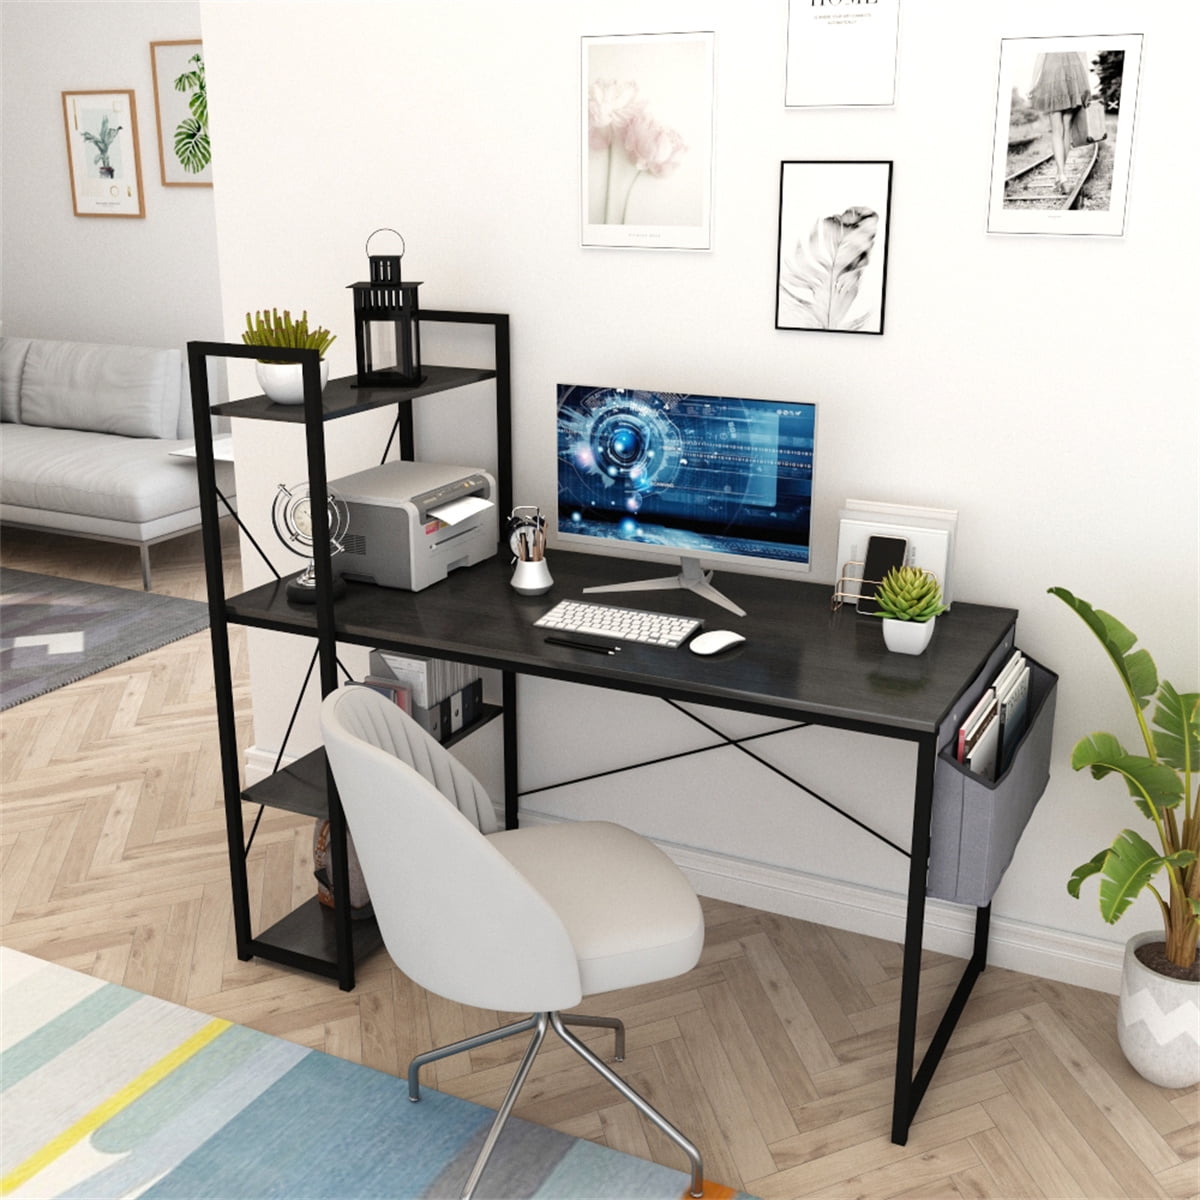 Details about   Industrial Computer Desk Home Office Writing Desk PC Laptop Study Workstation 